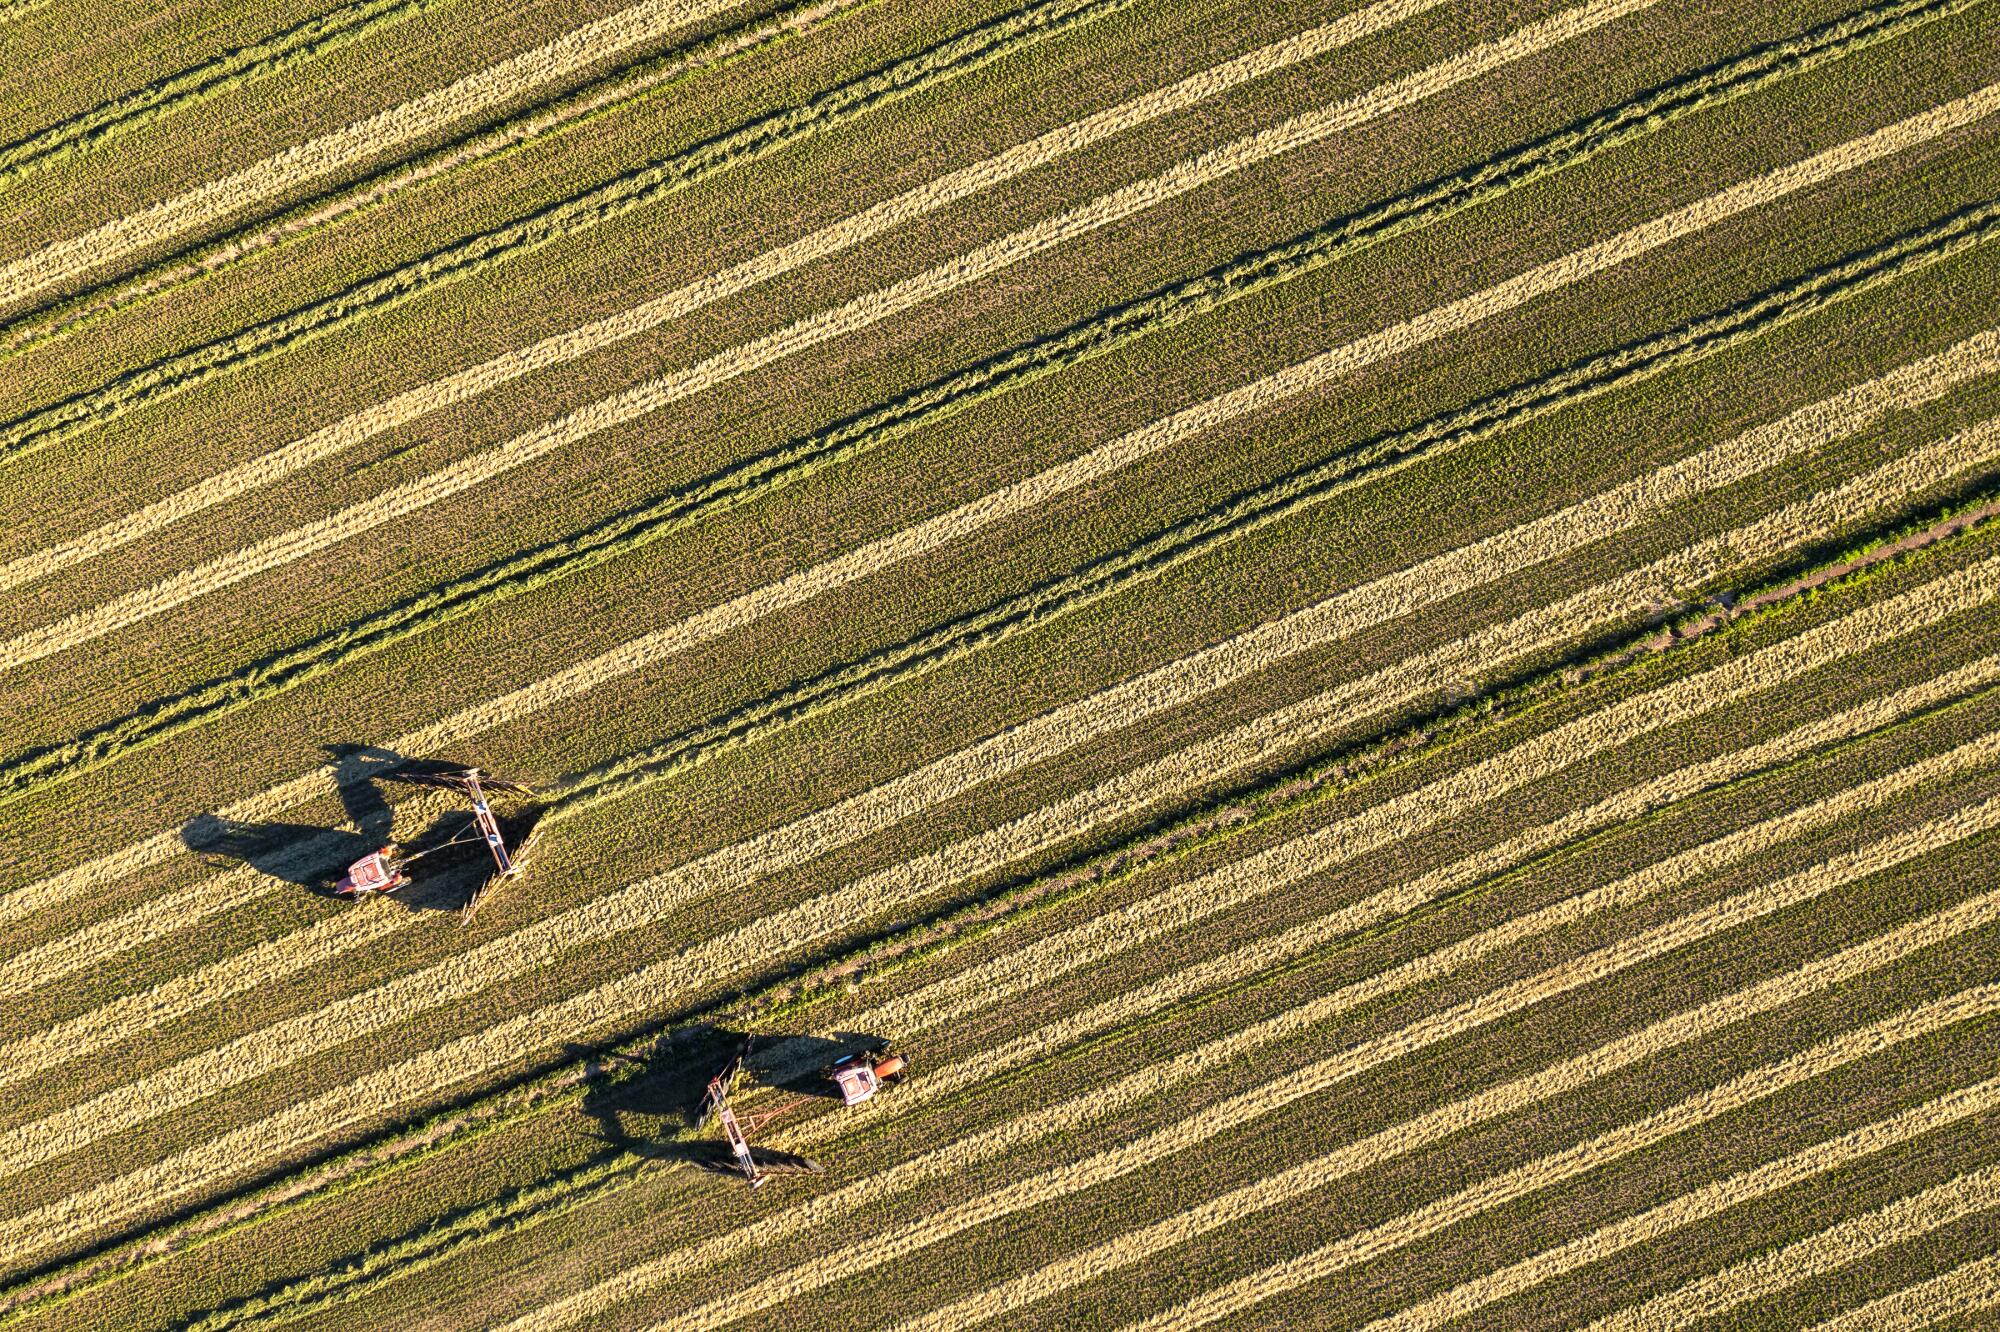 An aerial view of farm machinery harvesting alfalfa